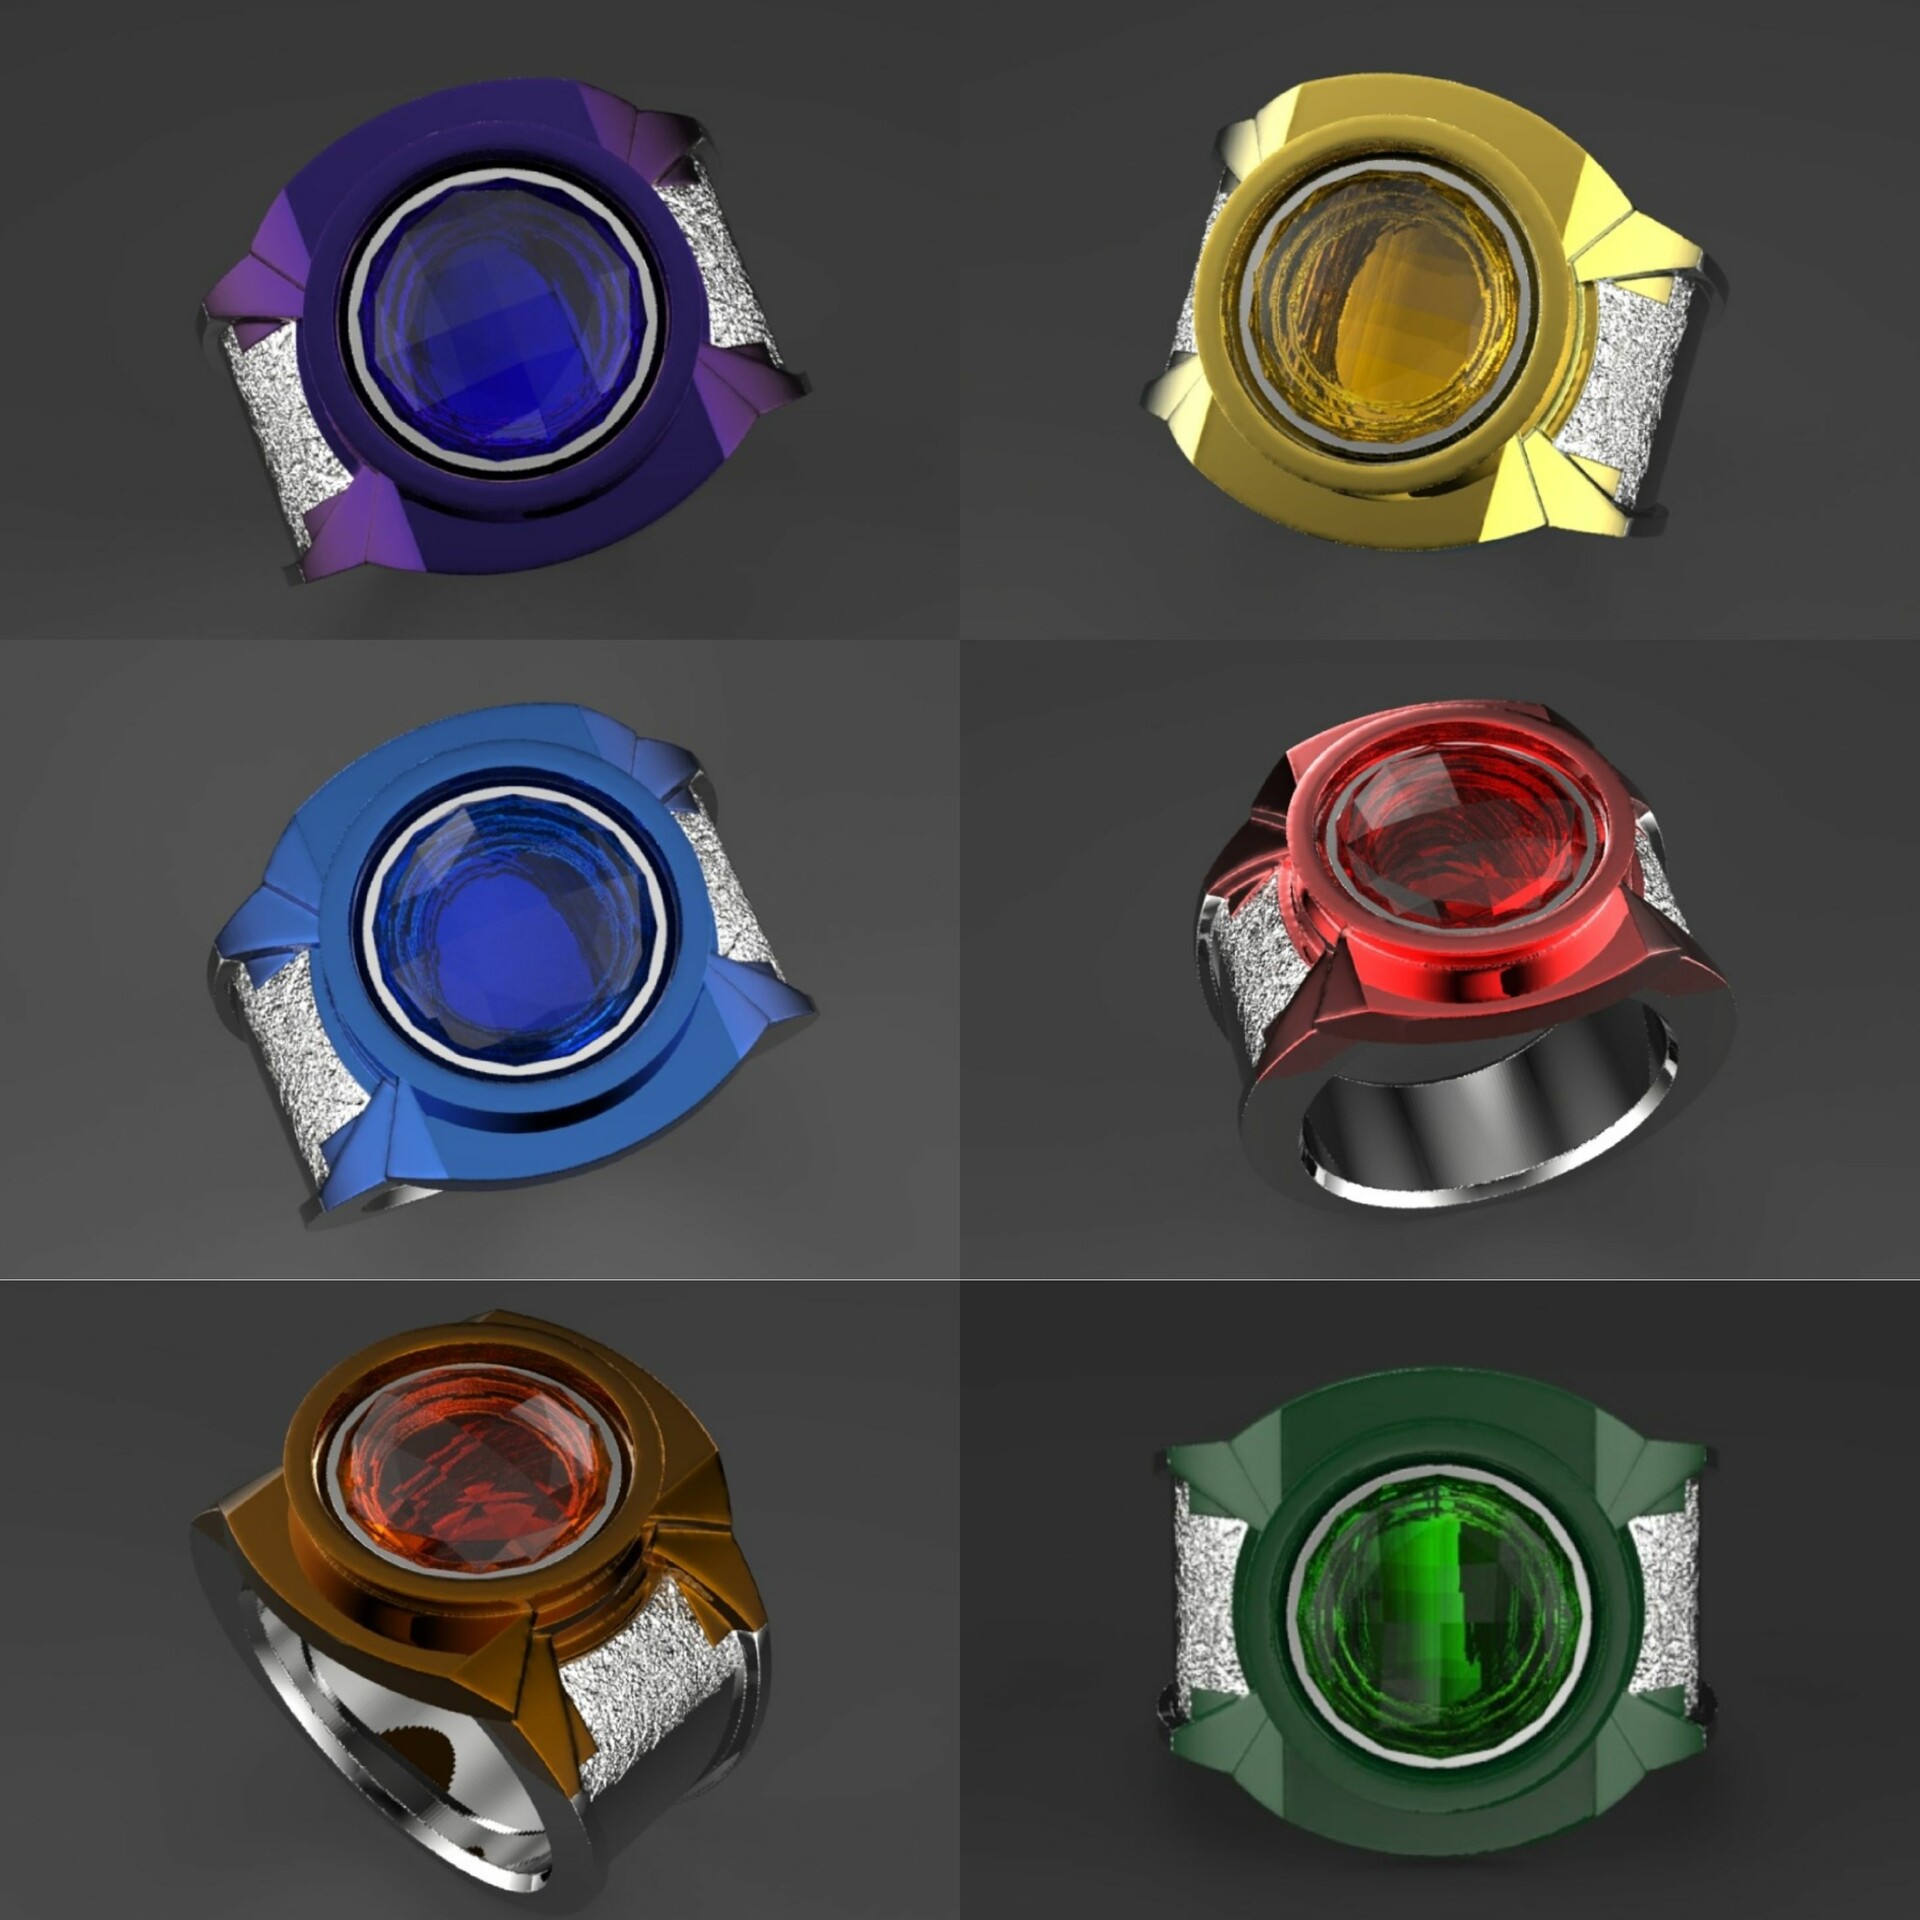 all lantern rings